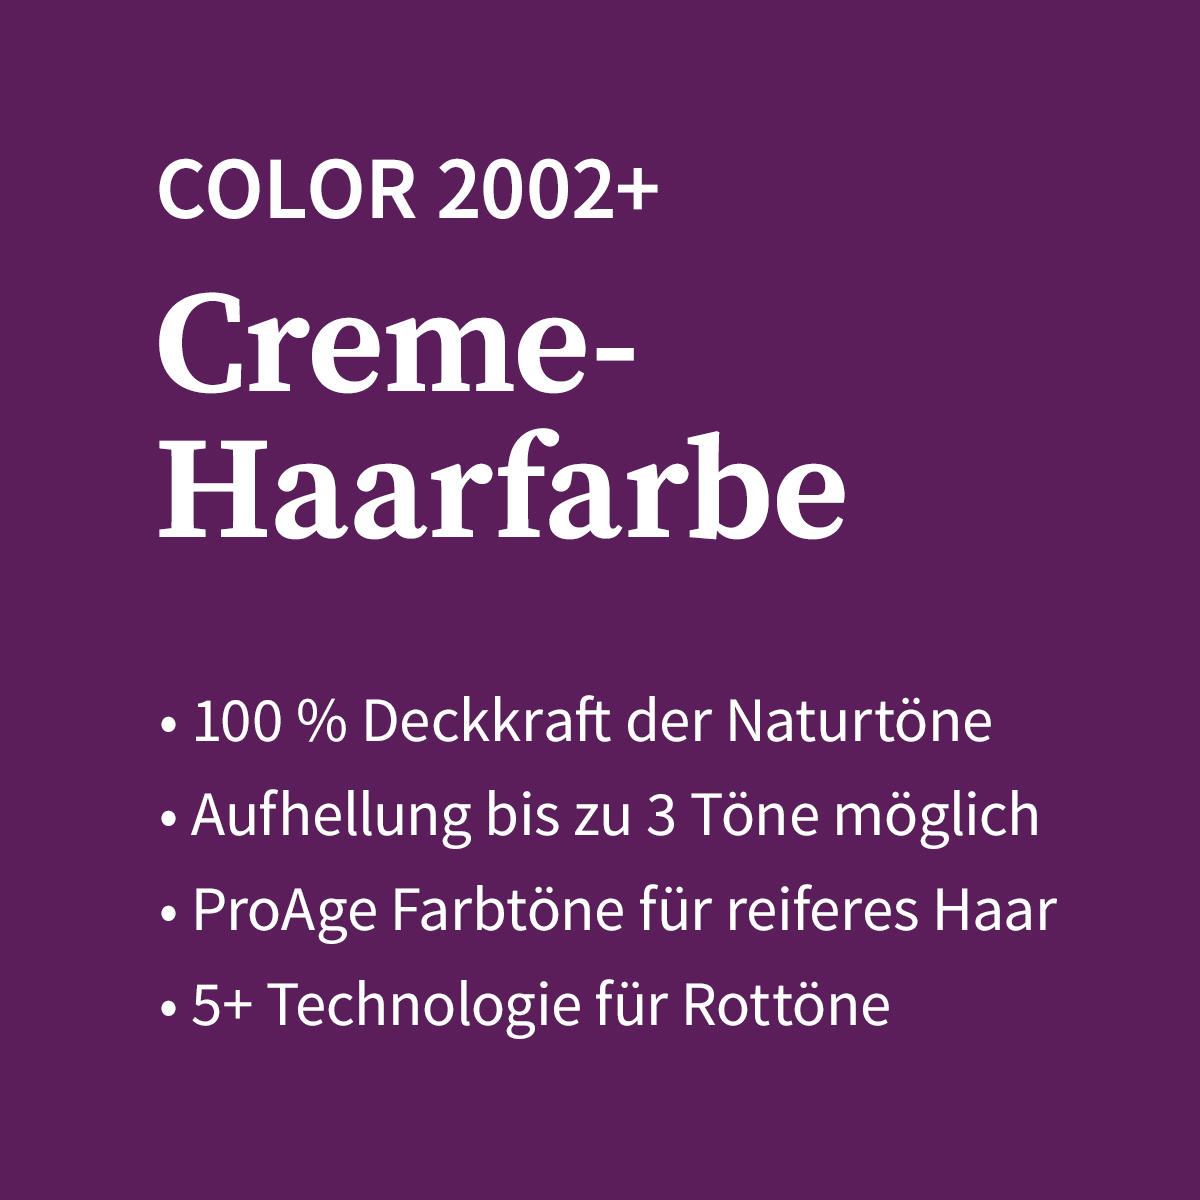 Basler Color 2002+ Cremehaarfarbe 4/1 mittelbraun asch, Tube 60 ml - 4